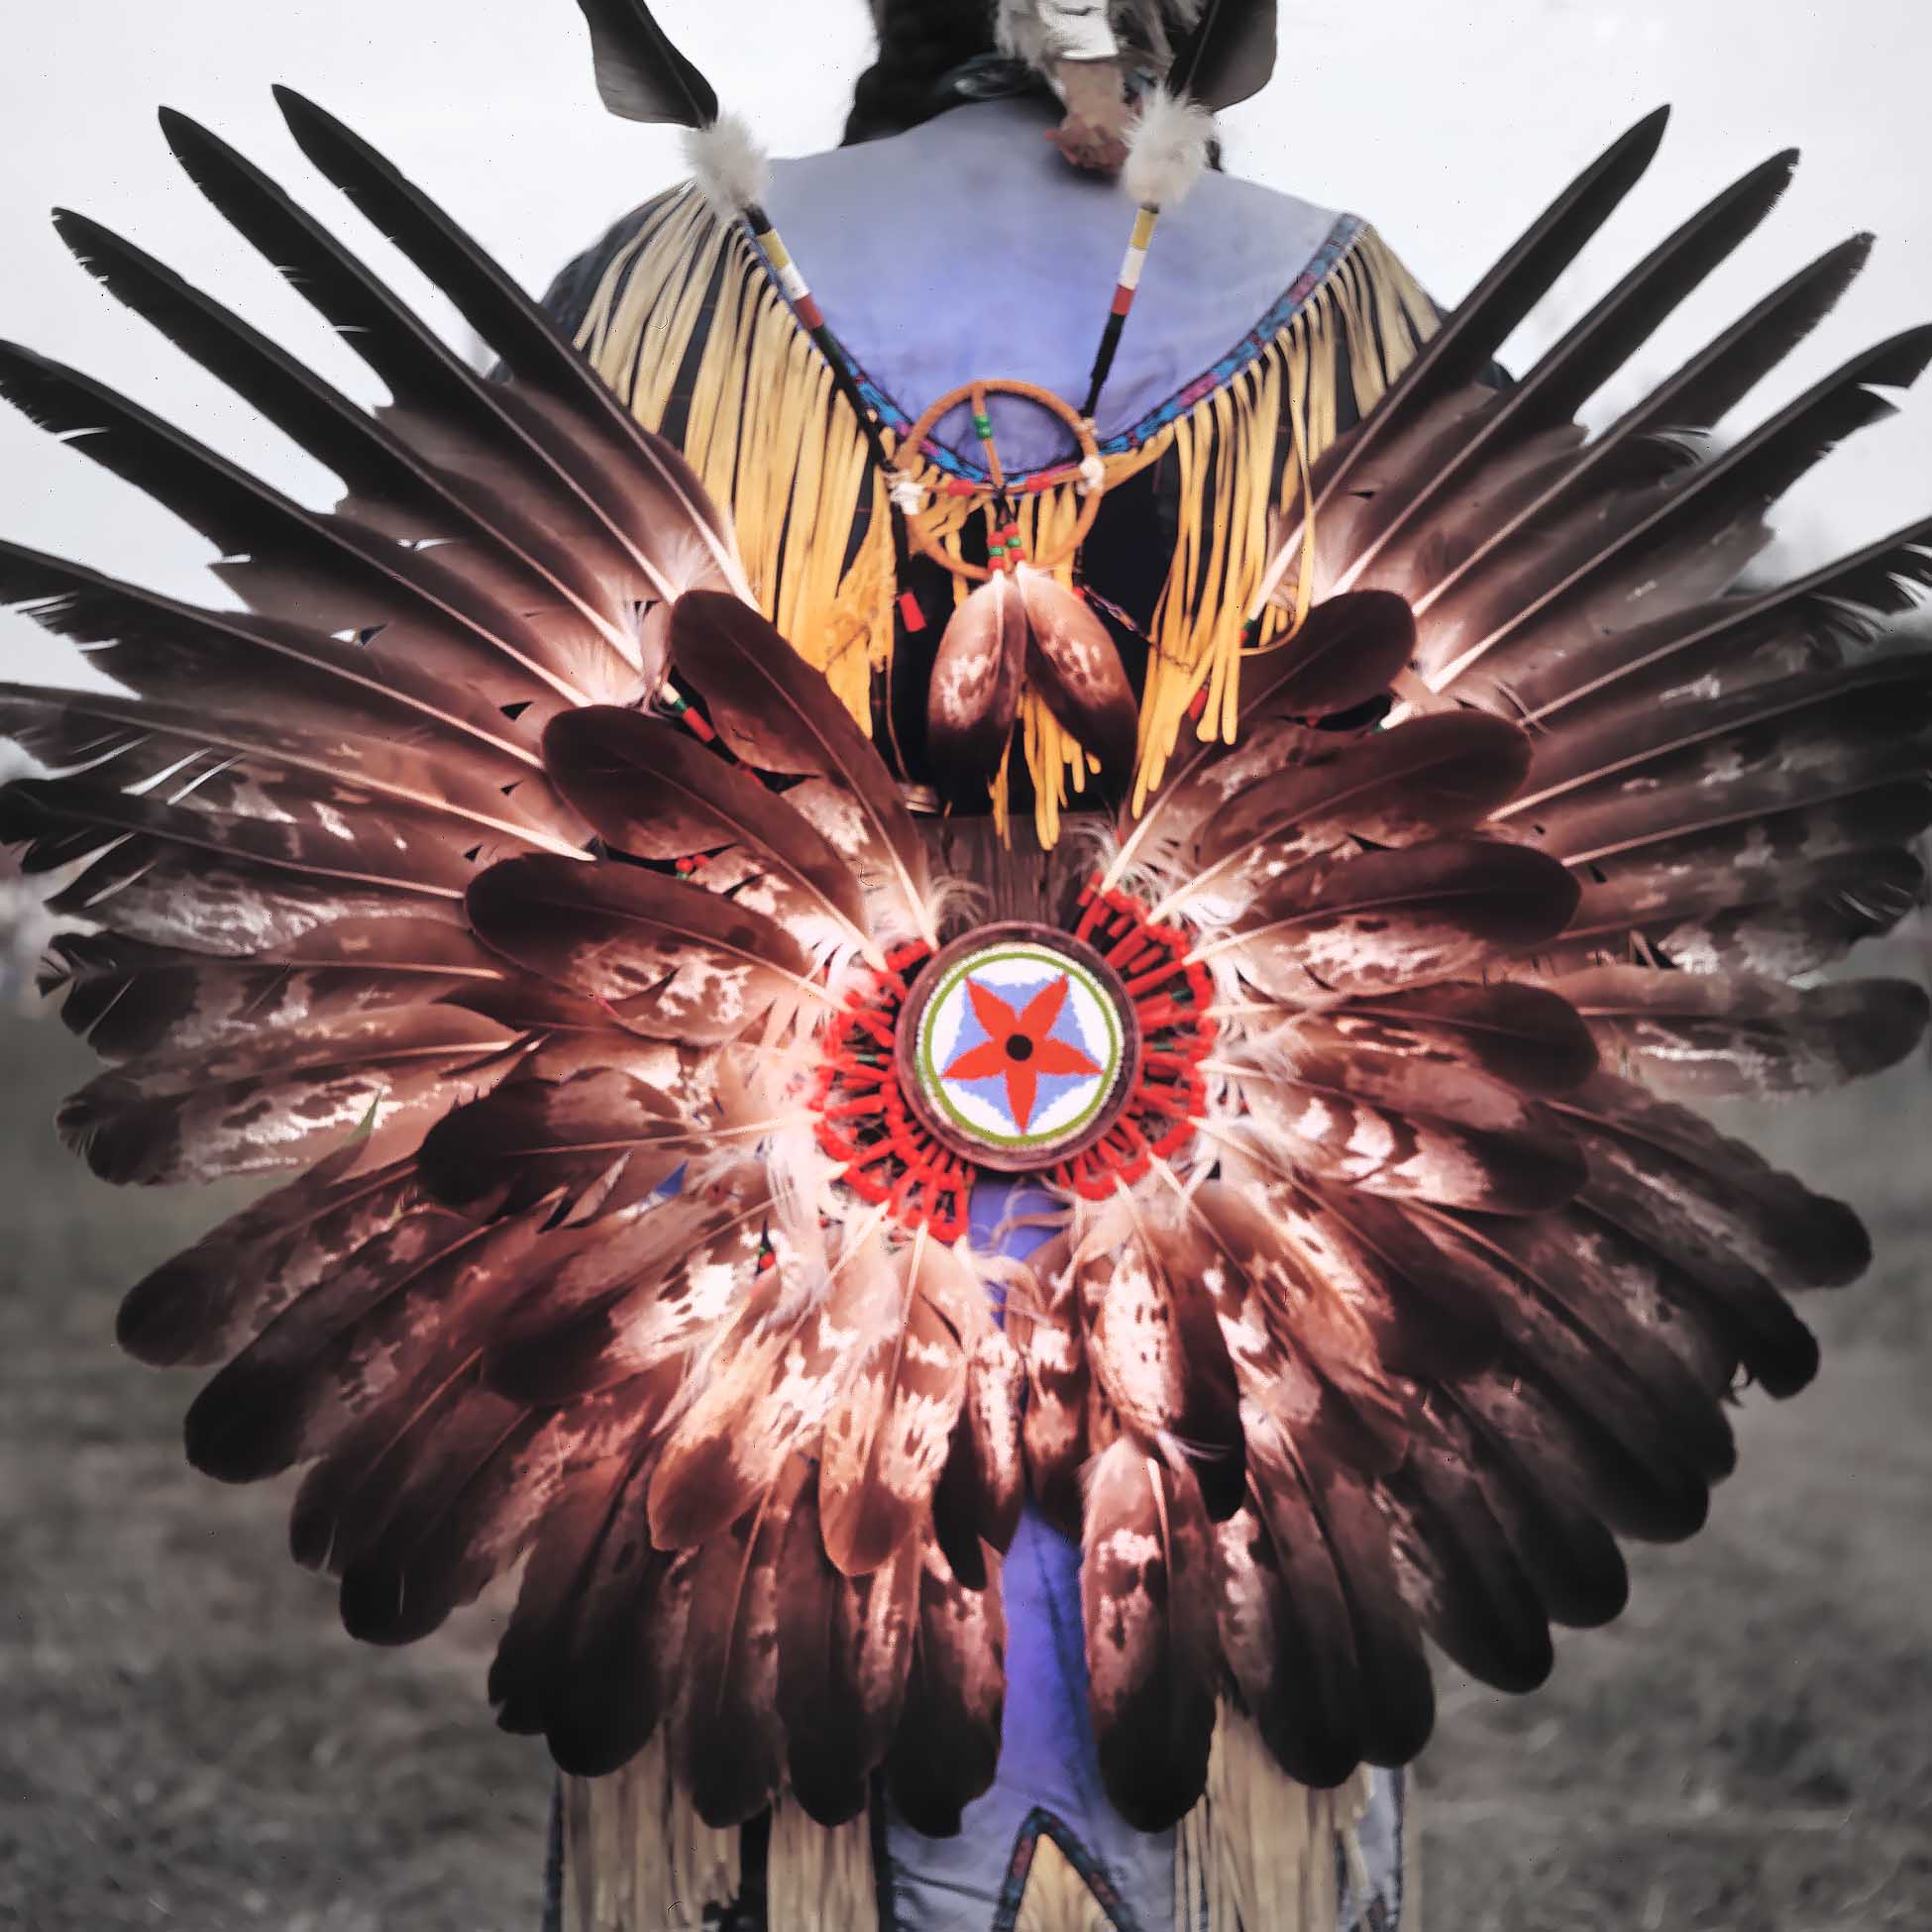 ip Pine Ridge Story Sioux website powwow regalia photo by Design Direction llc clark most